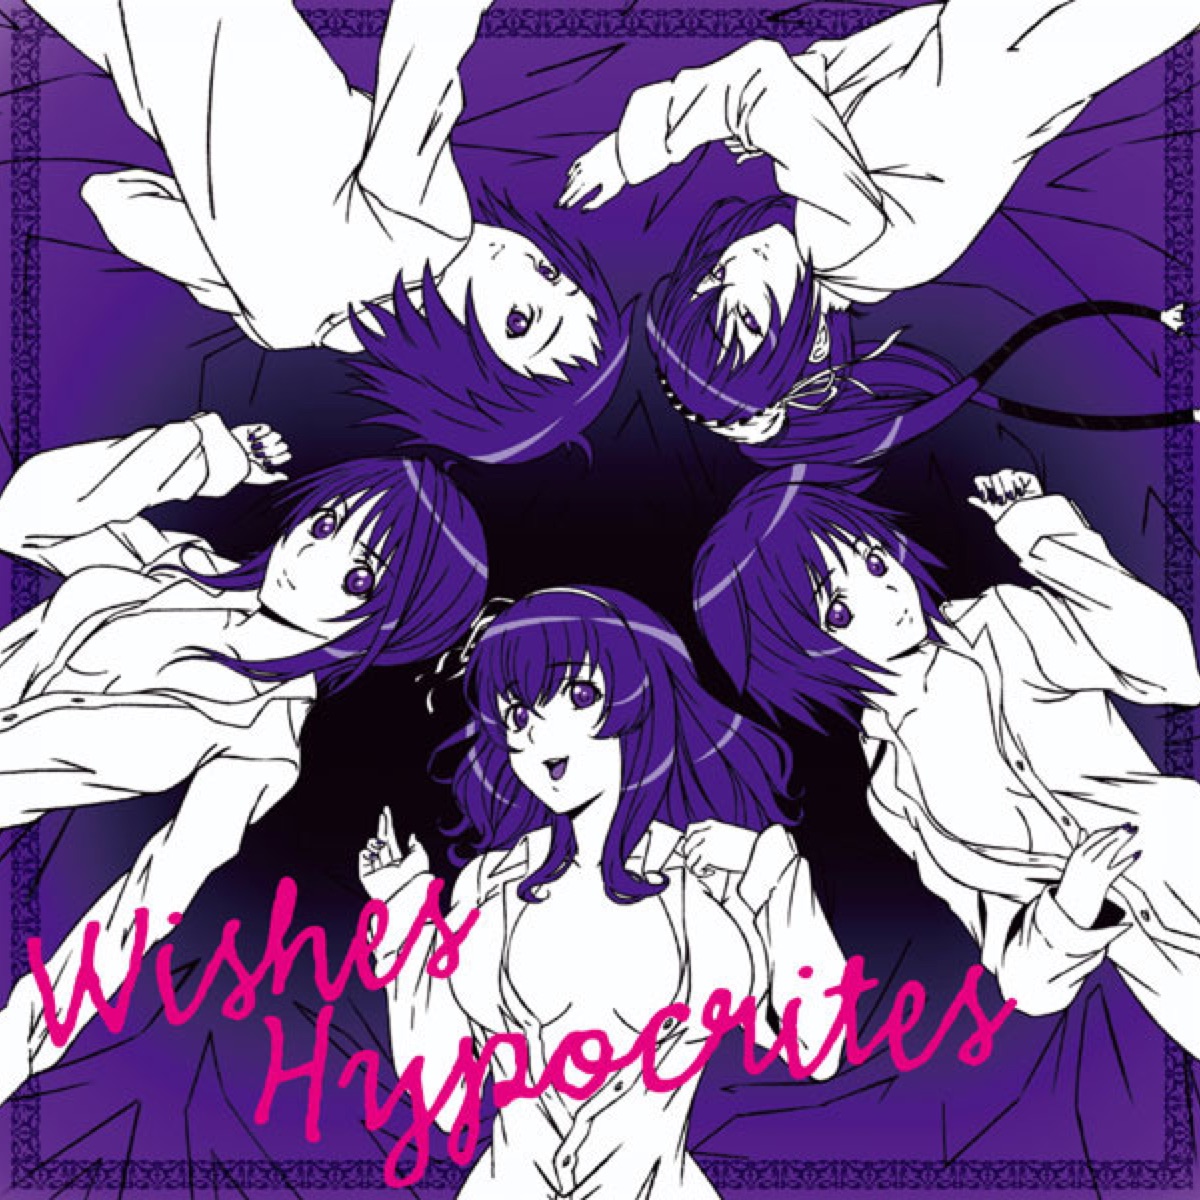 Cover for『Mafuyu Oribe (Ayumi Fujimura), Tomo Yamanobe (Aki Toyosaki), Teresa Beria (Minori Chihara), Katja (Aya Hirano), Hana Katsuragi (Youko Hikasa) - Wishes Hypocrites』from the release『Wishes Hypocrites』